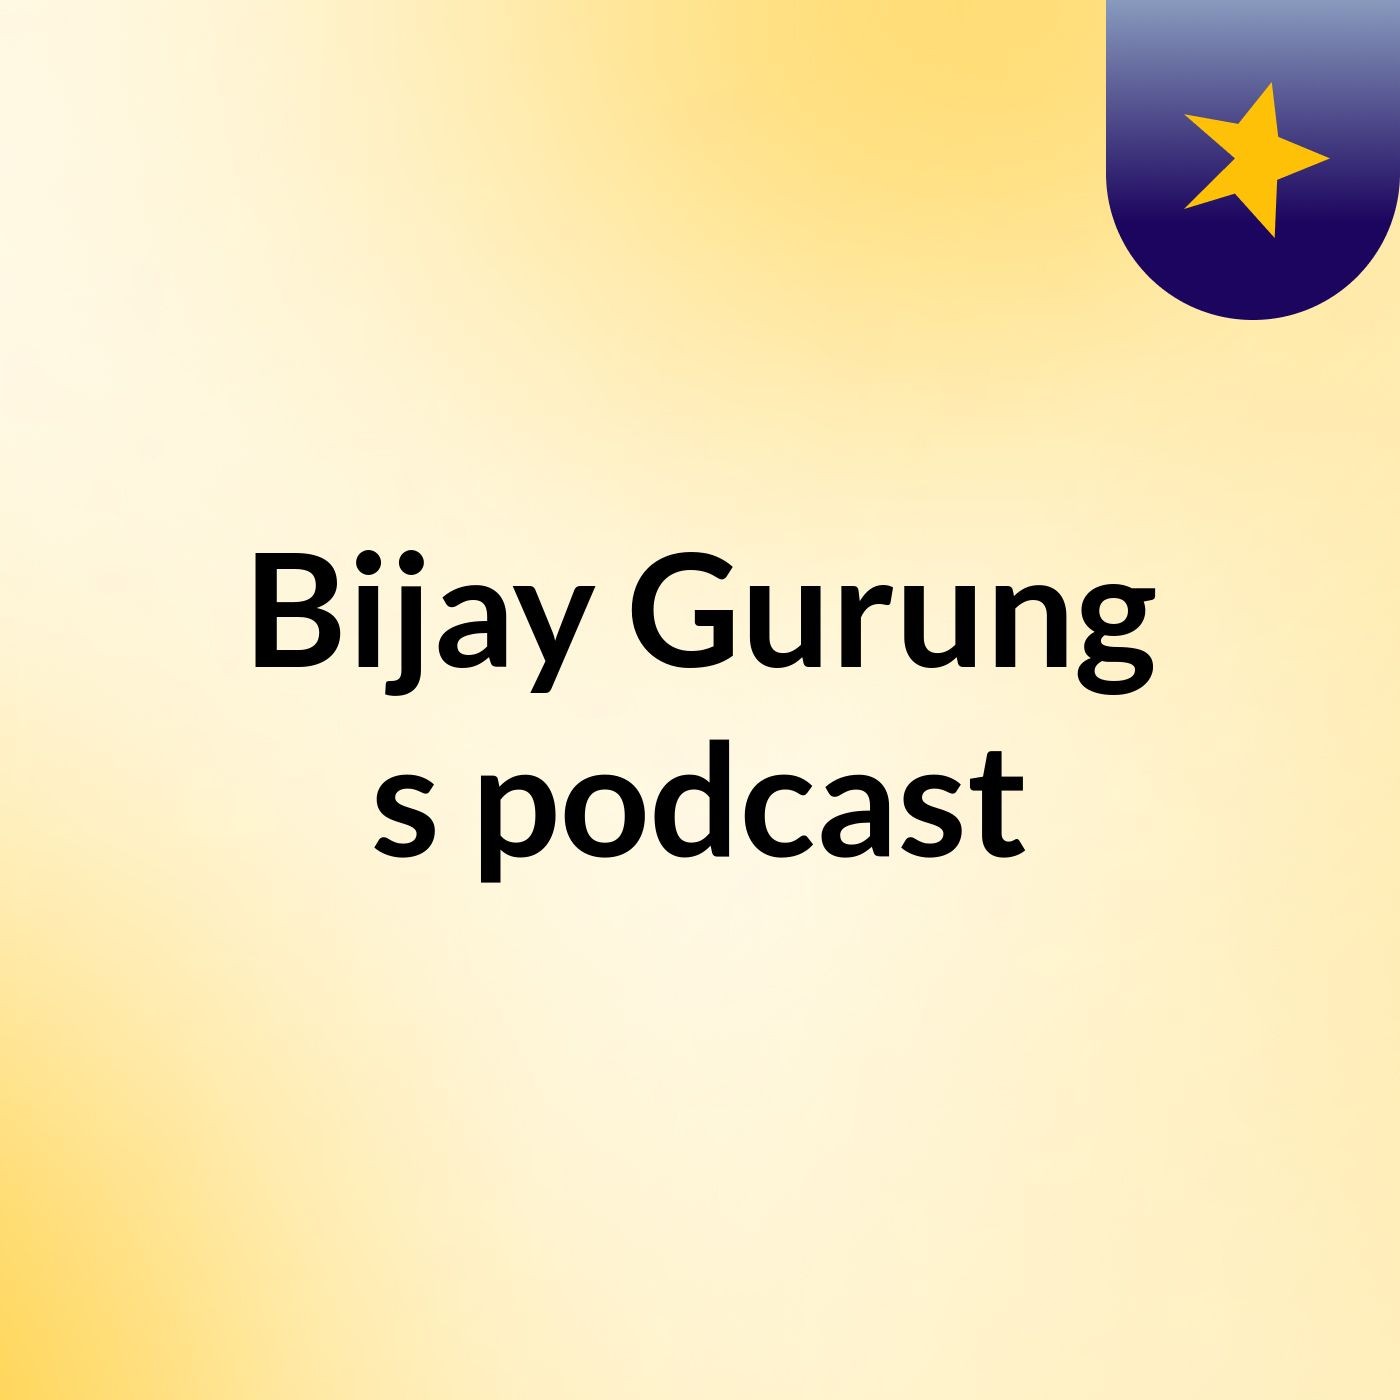 Bijay Gurung's podcast